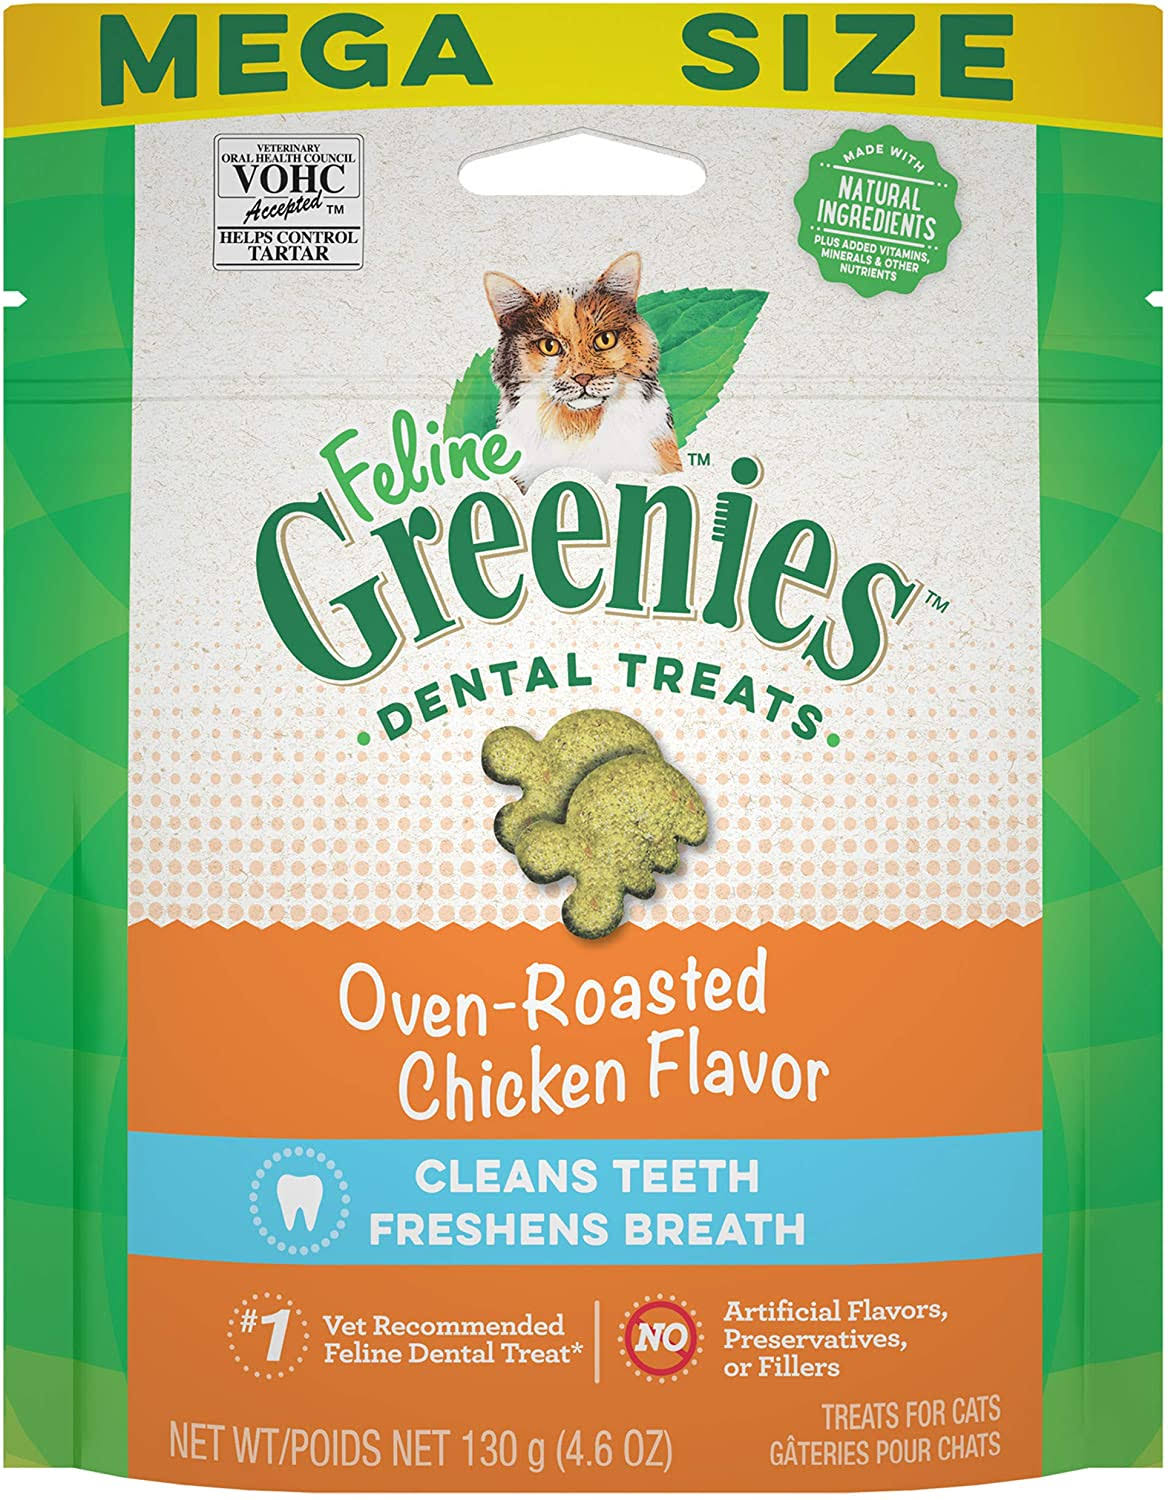 Feline Greenies Natural Dental Care Cat Treats 4.6-5.5 oz